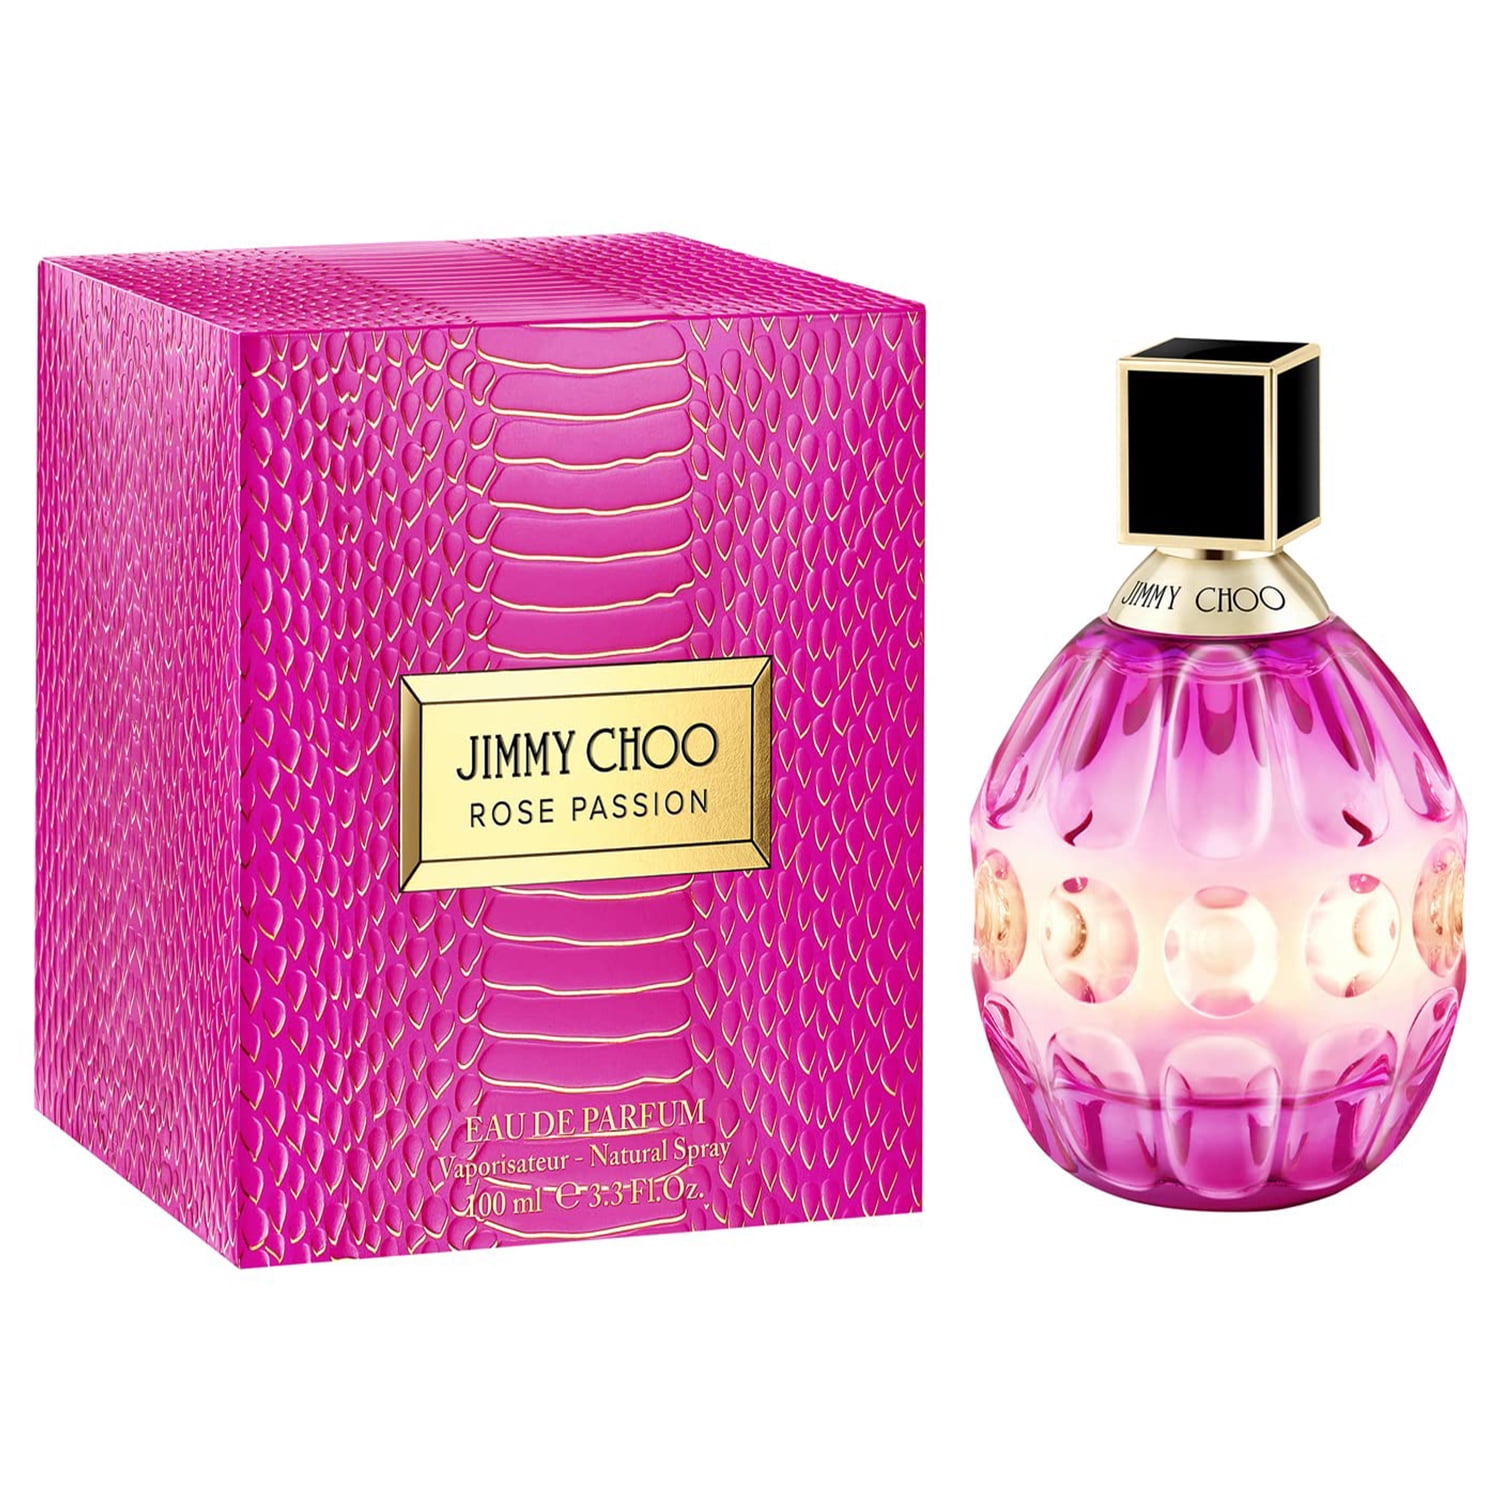 Jimmy Choo Rose Passion for Women Eau de Parfum Spray, 100 ml / 3.3 fl. oz